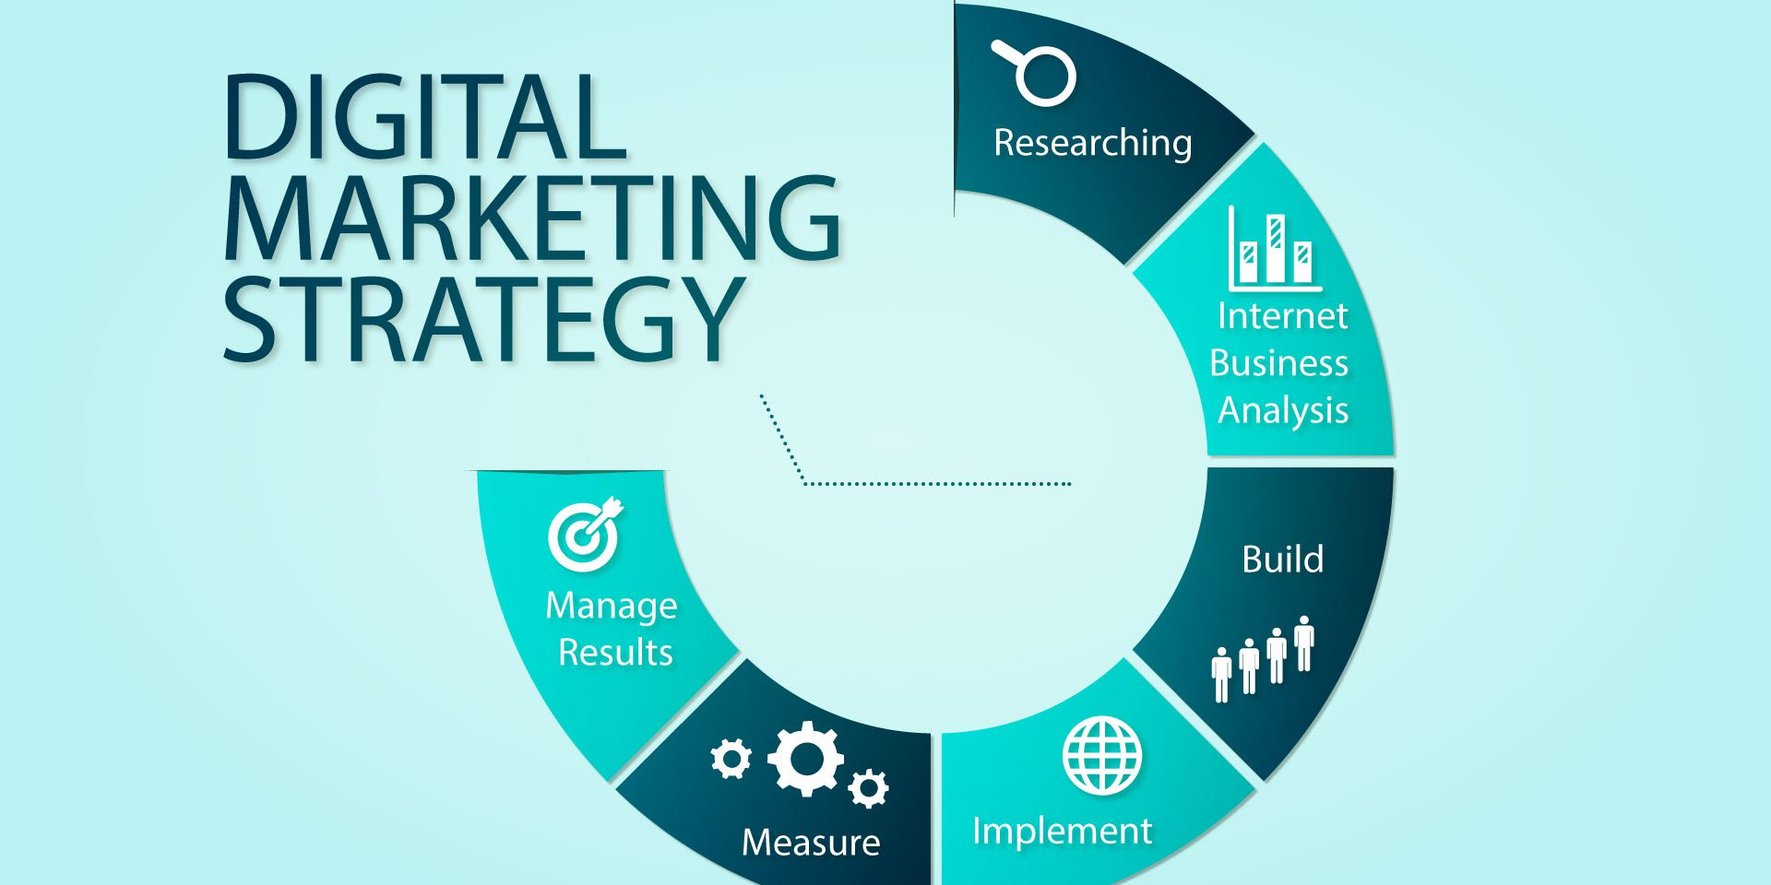 Digital-Marketing-Strategy-Steps